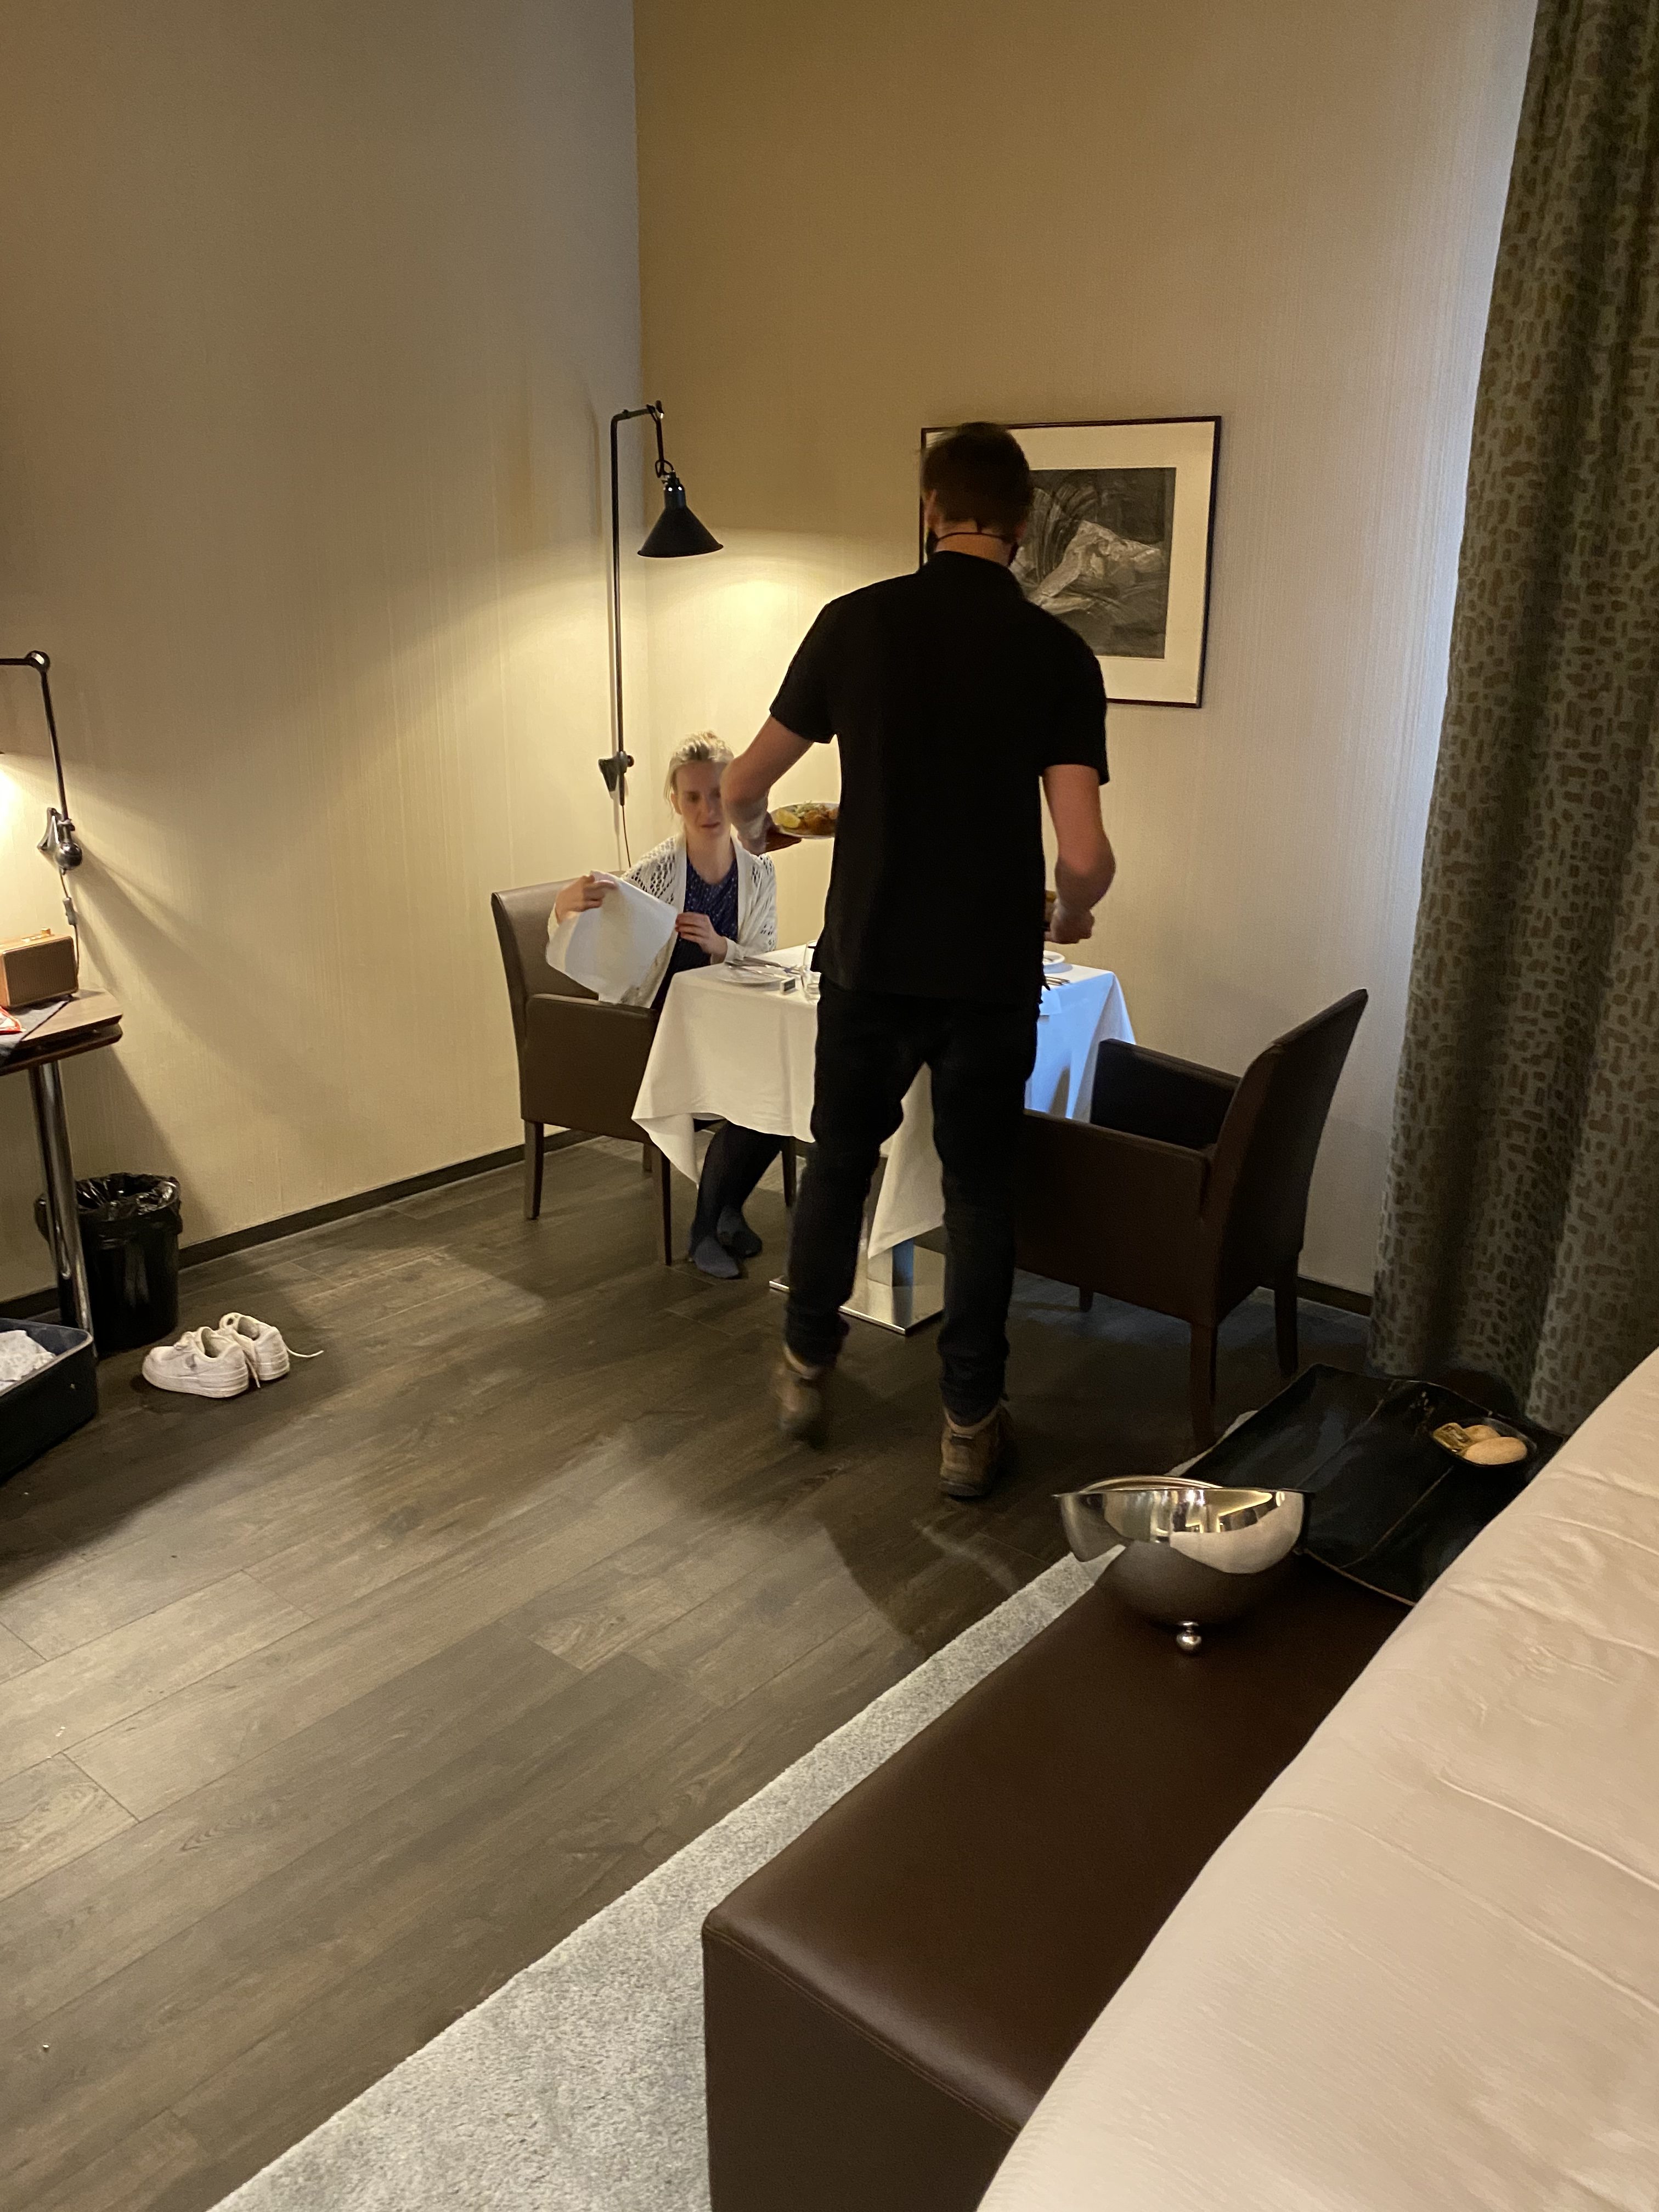 Privédineren op hotel kamer overnachting